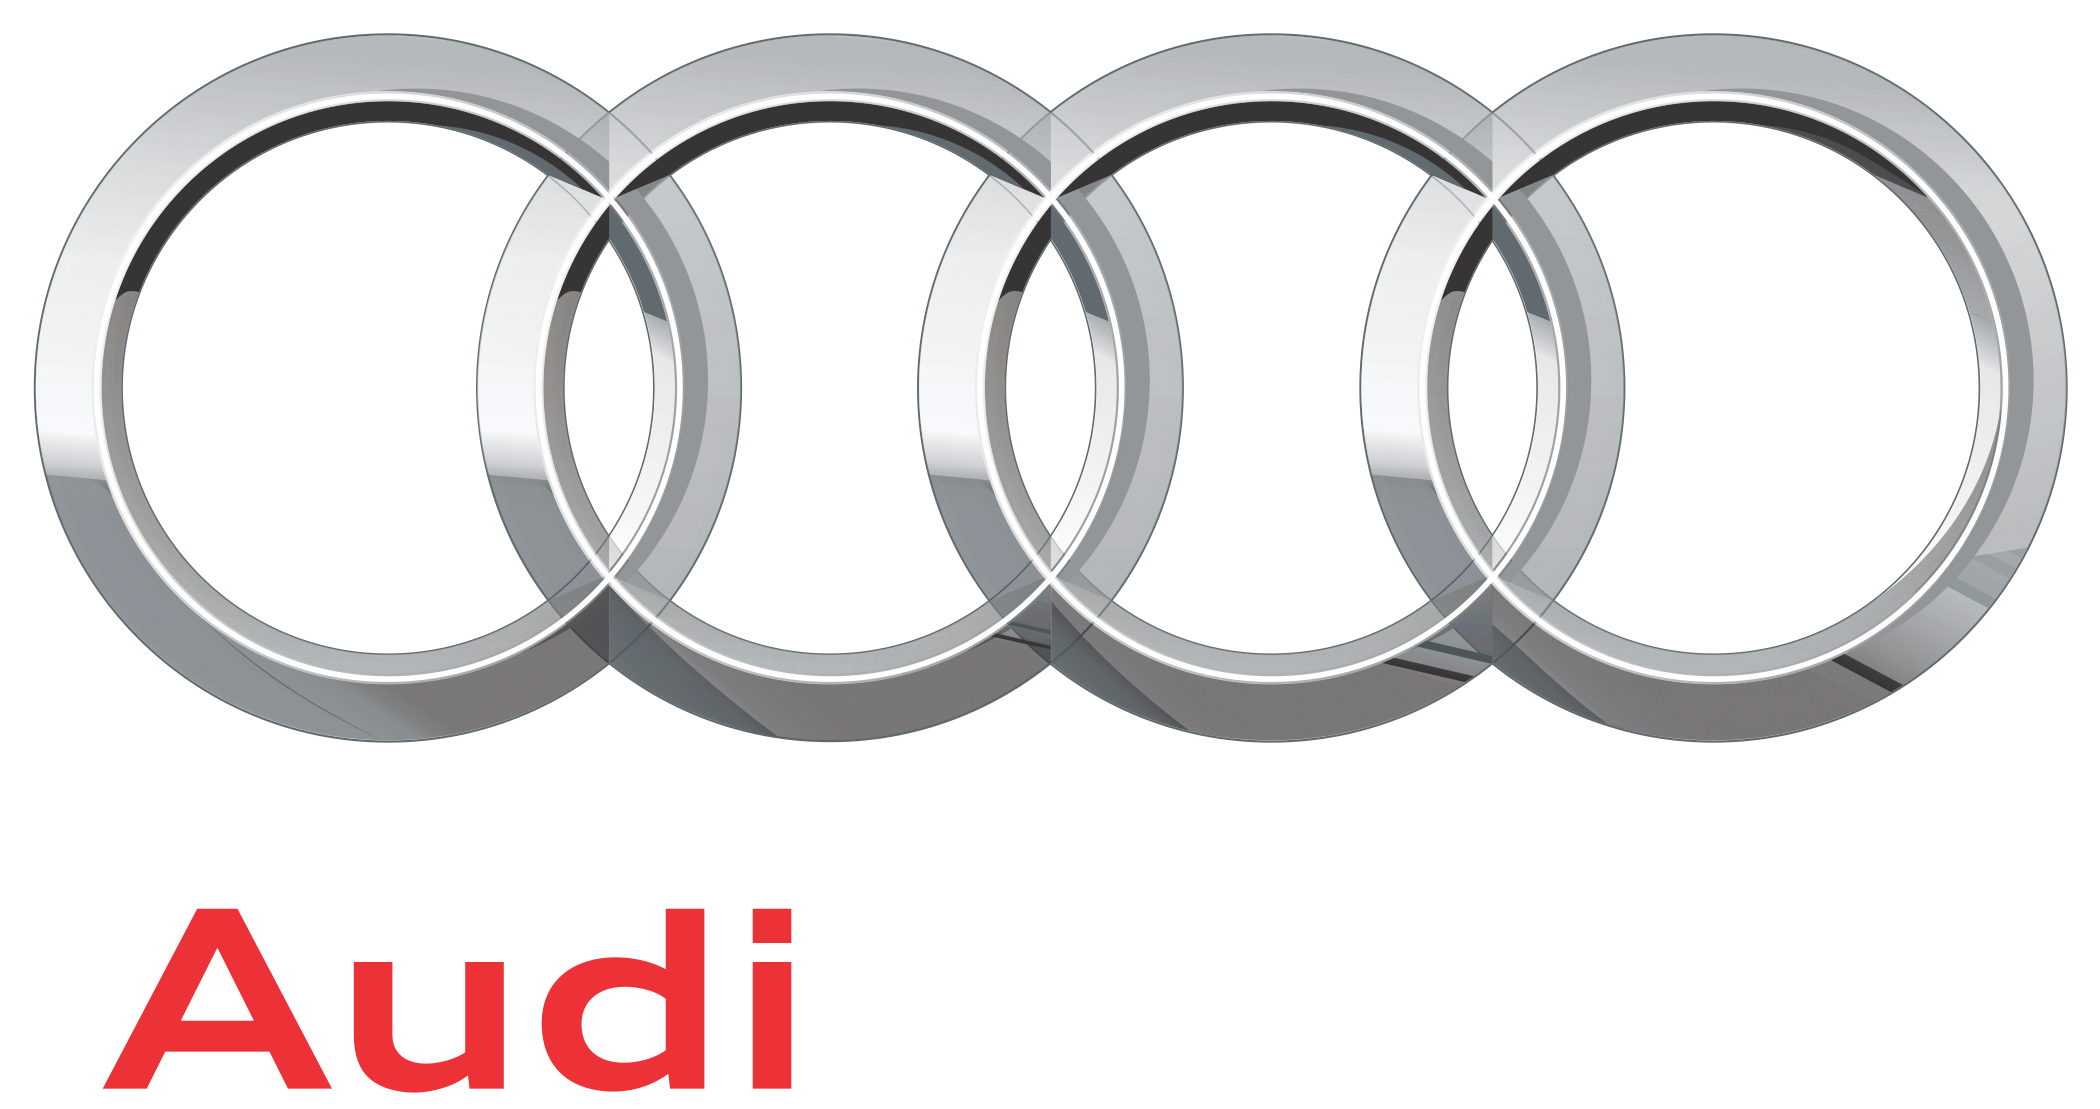 audi logo 1 - Audi Logo